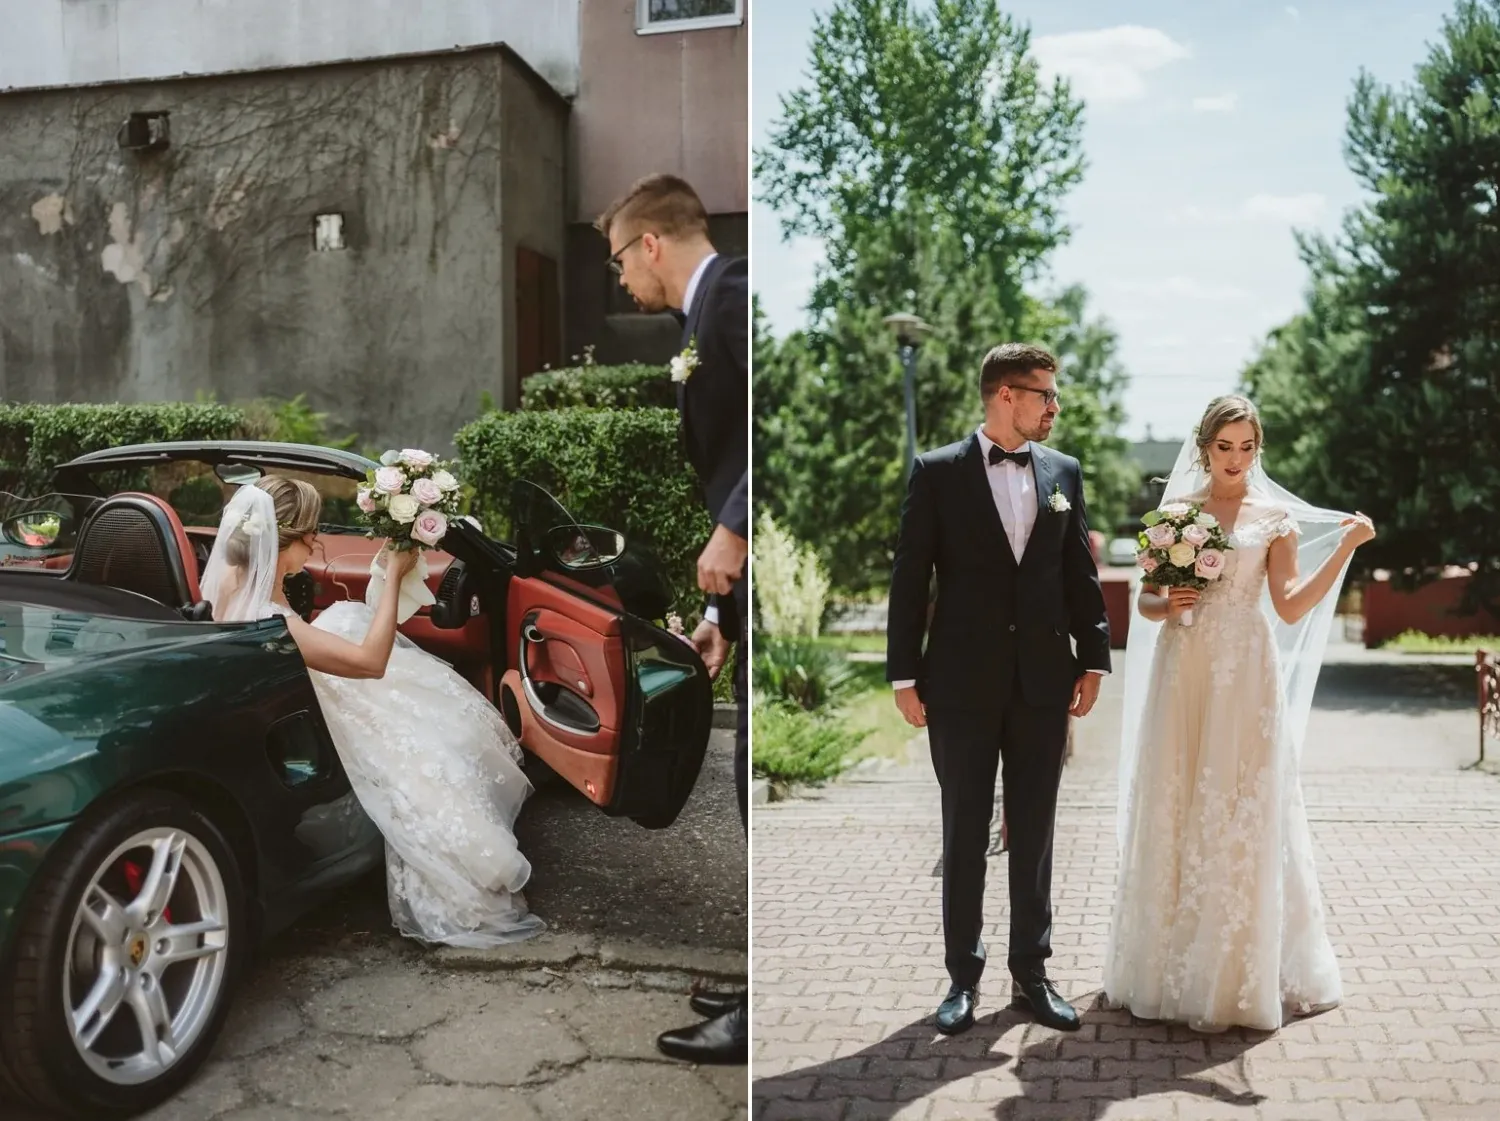 nataliakajetan_wedding_7.webp - Natalia & Kajetan- Monika Chmielewska - wedding, portaits, family photography - Munich